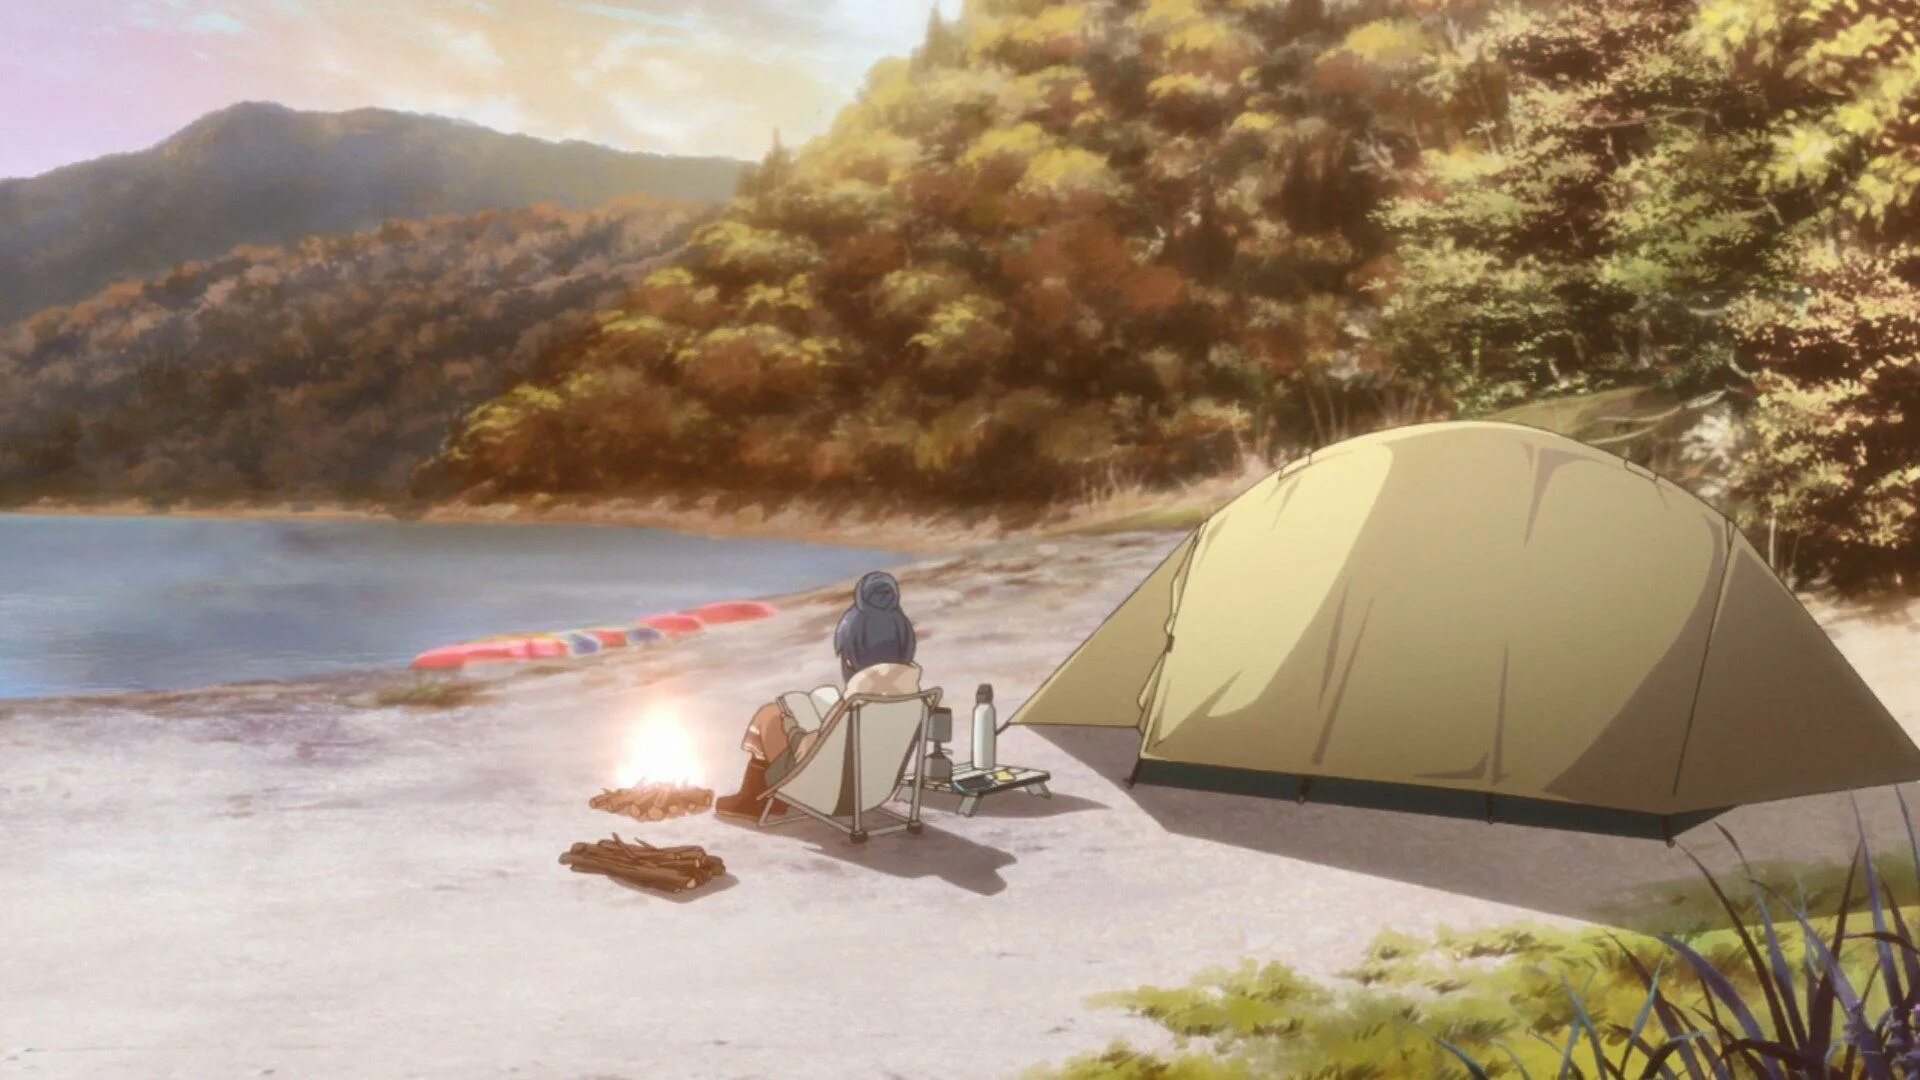 Yuru camping. Yuru Camp палатка. Yuru Camp Фудзи.